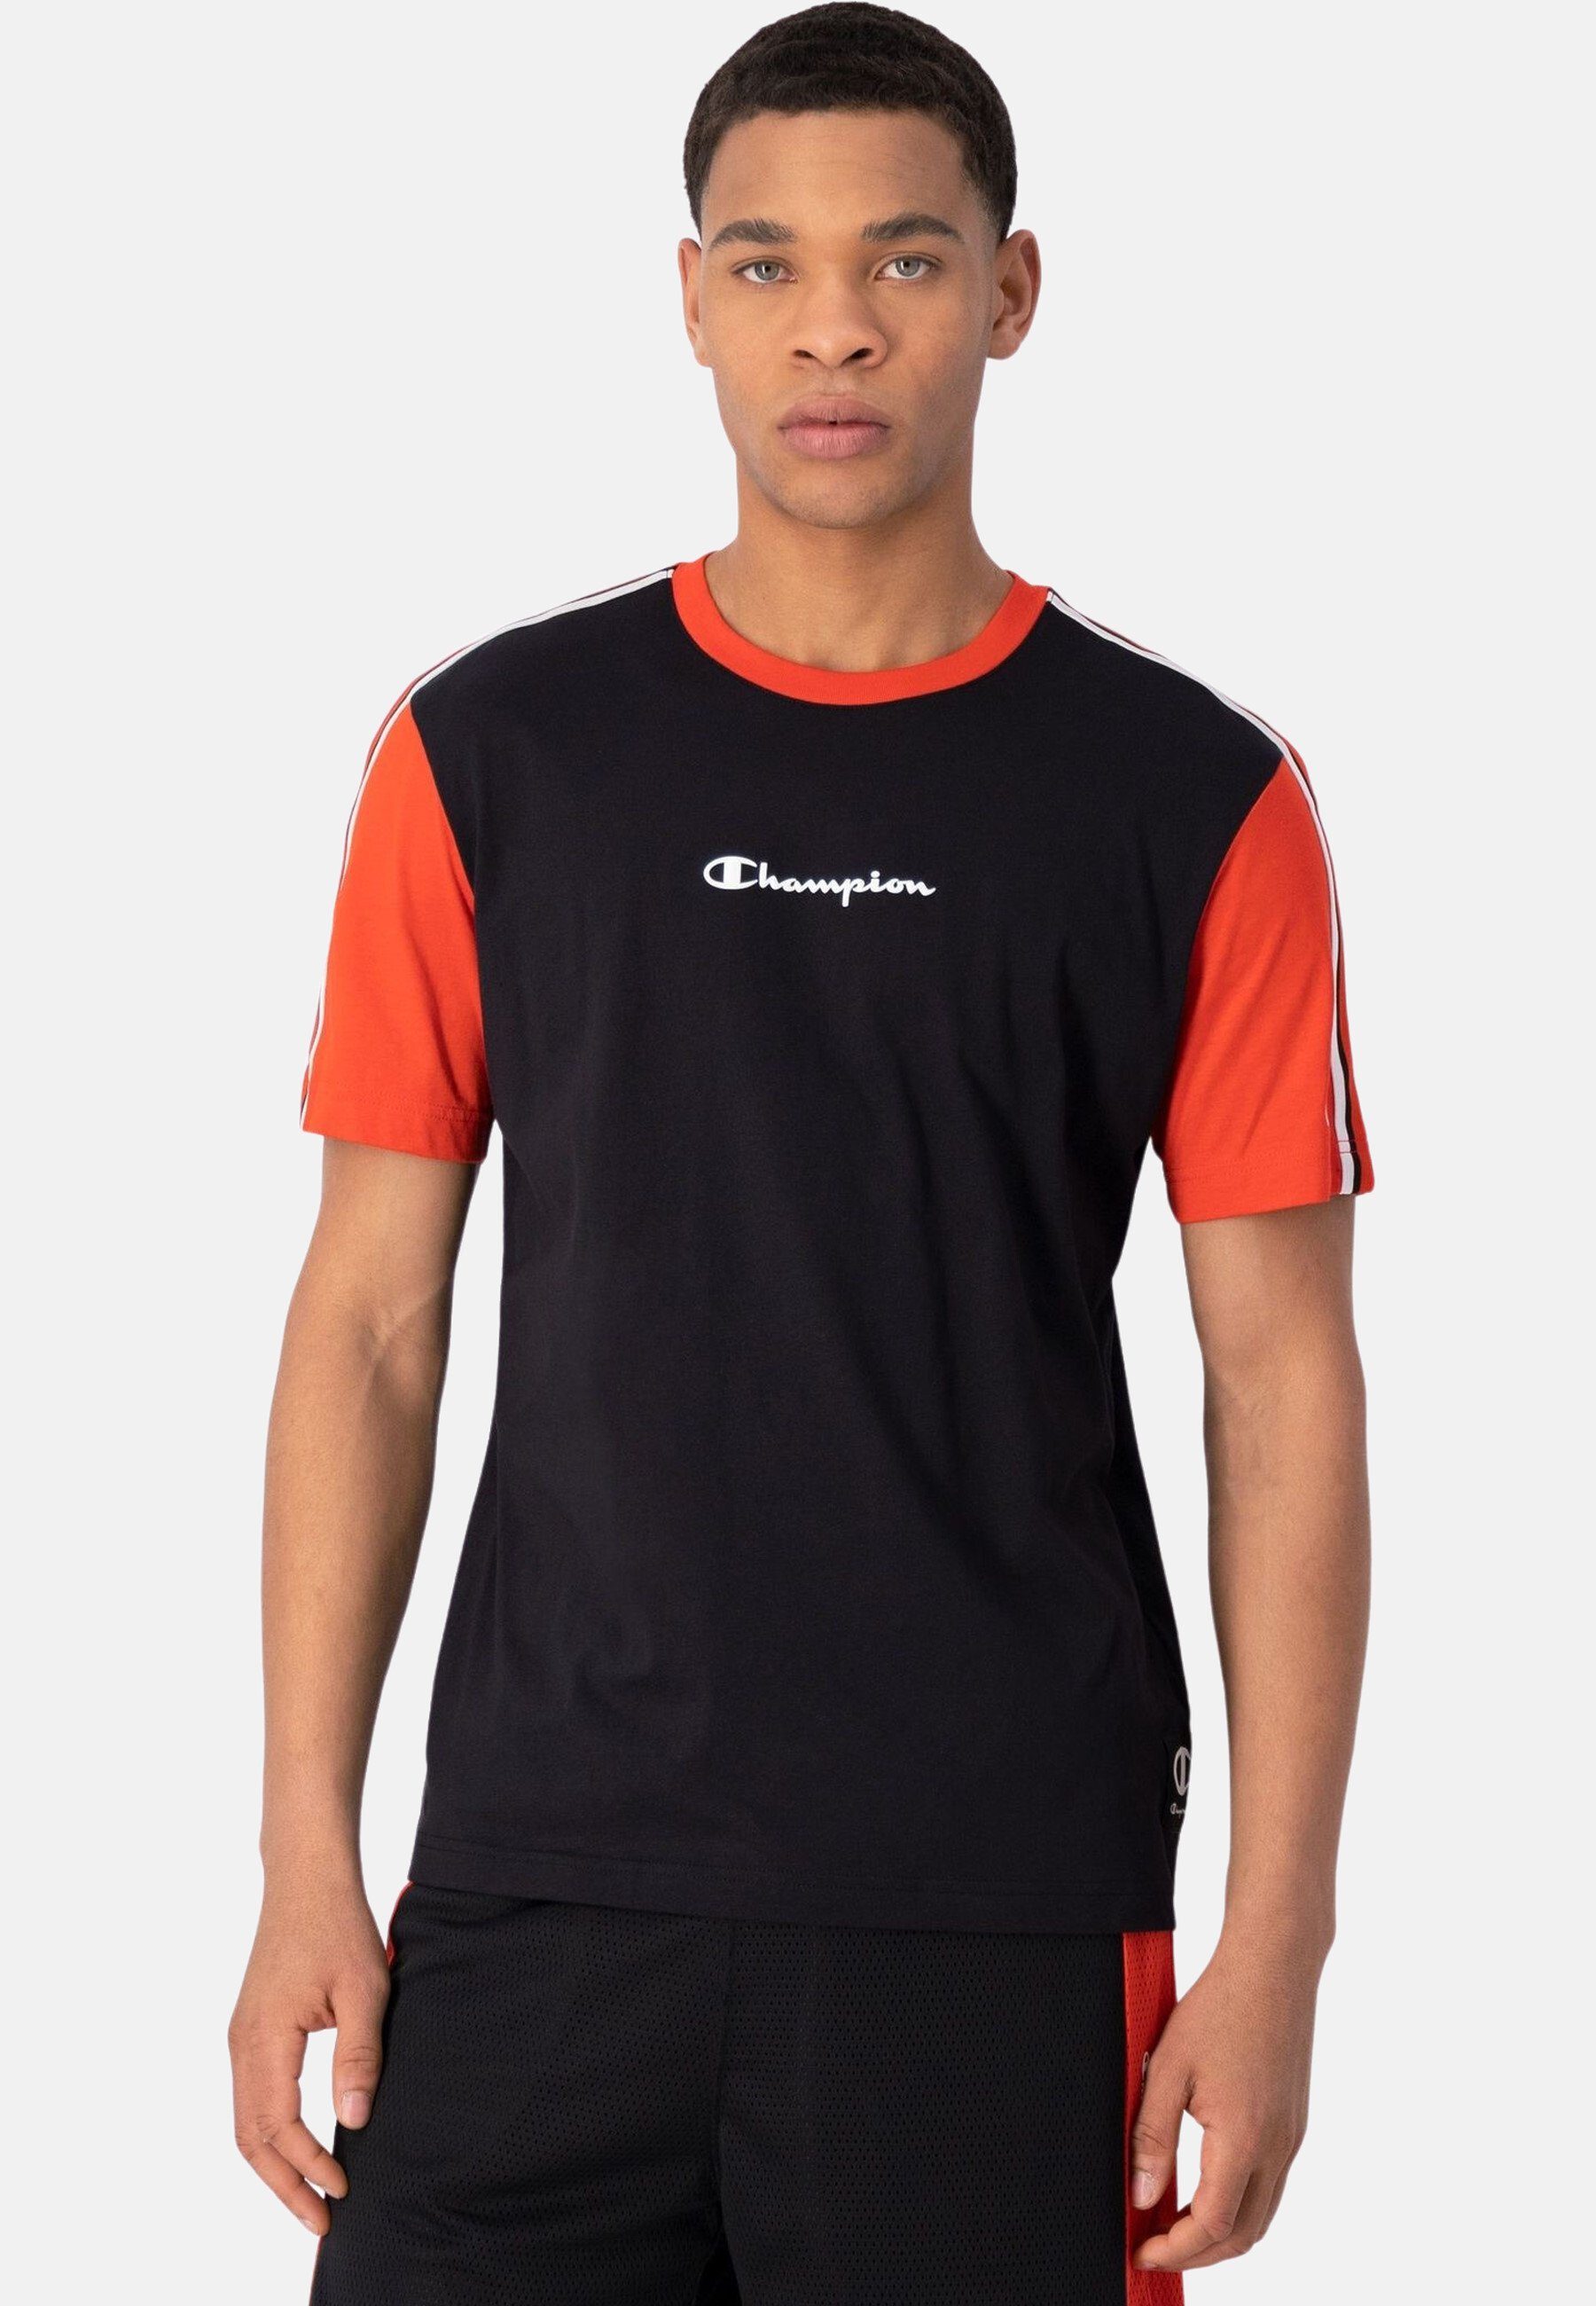 Comfort Jacquardband T-Shirt Shirt in mit schwarz Champion Rundhals-T-Shirt